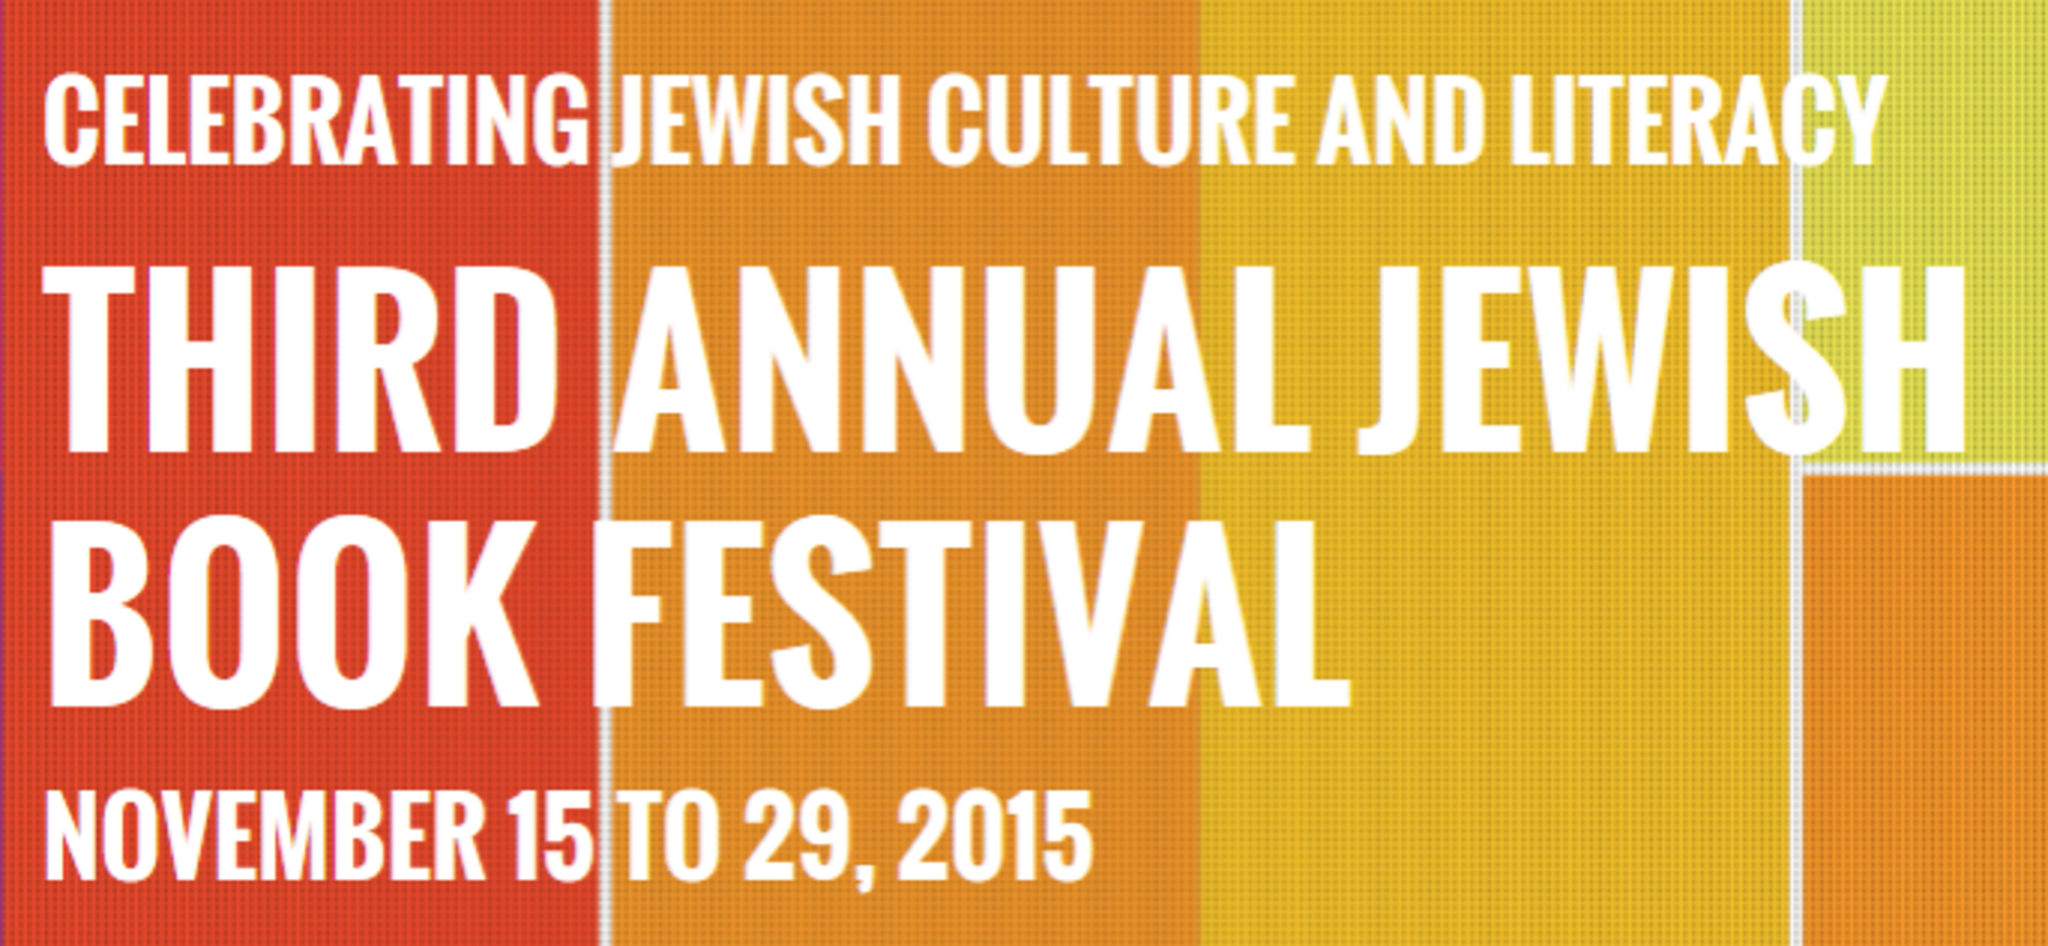 Third Annual Jewish Book Festival